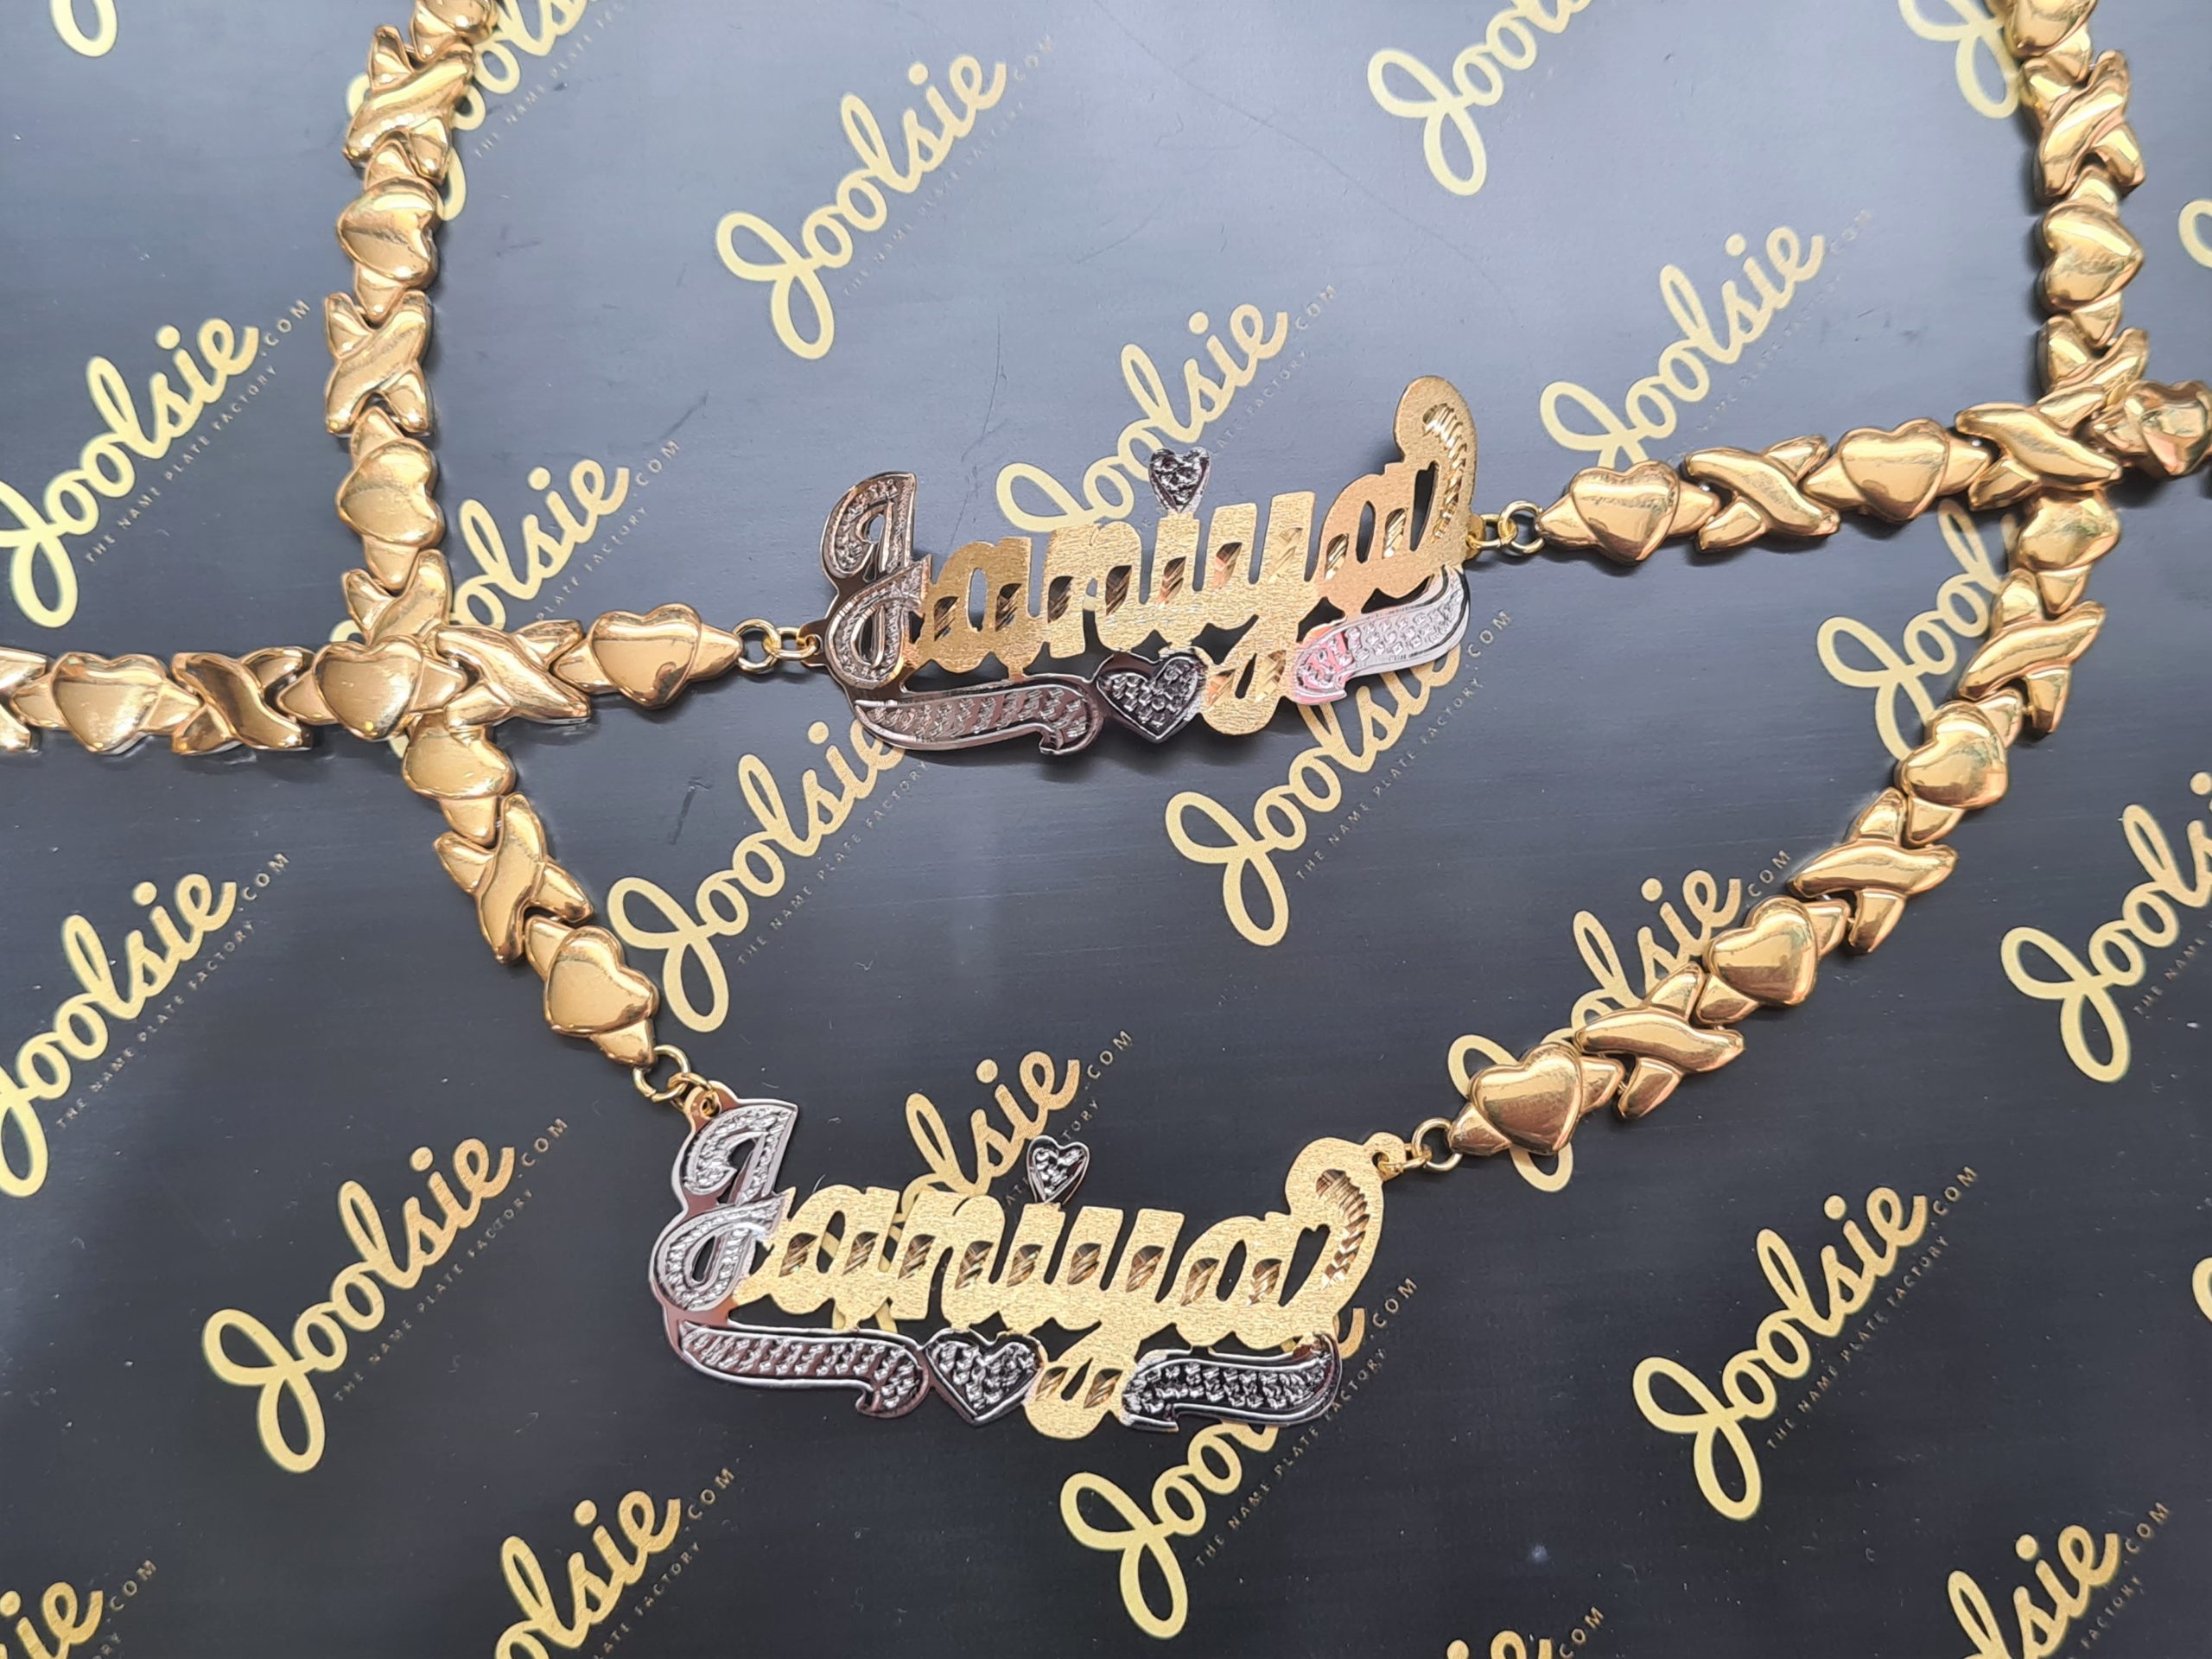 XO Hugs n Kisses Name Necklace & Bracelet Set